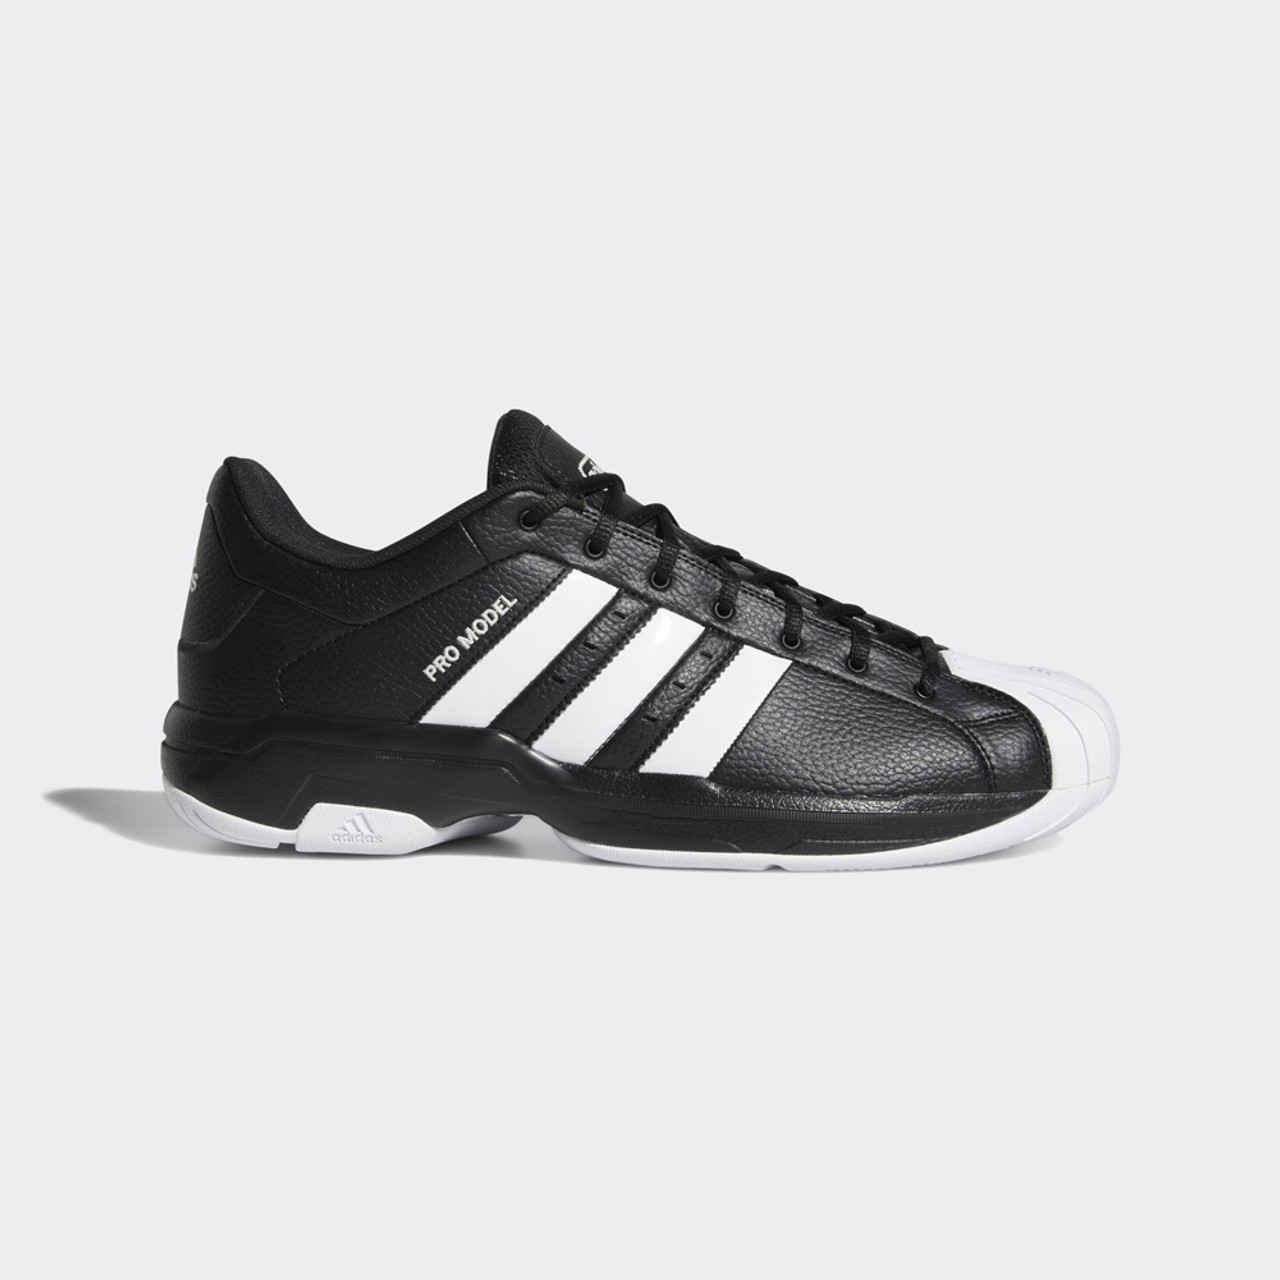 Adidas Unisex Adidas Pro Model 2G Low Basketball Shoes - Black | Discount  Adidas Unisex Athletic Shoes & More  